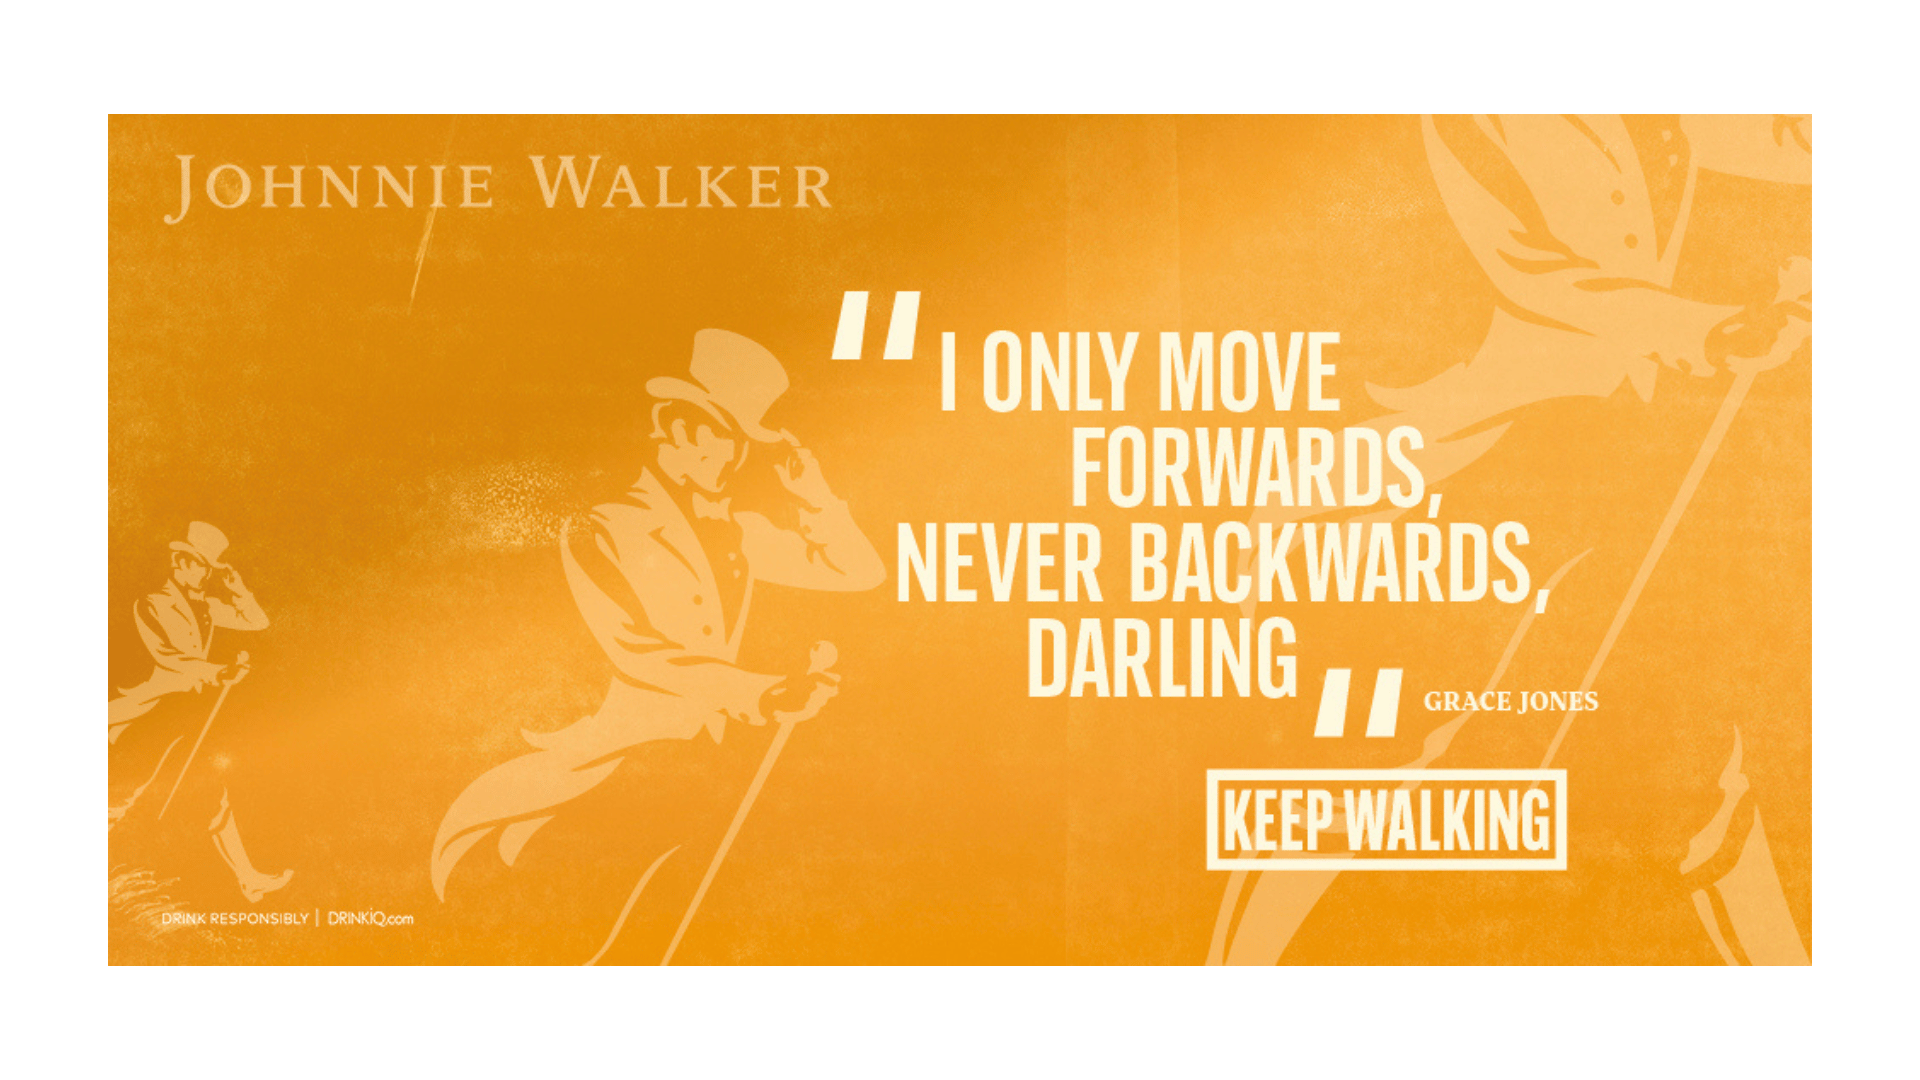 Brand Message Johnnie Walker Keep Walking